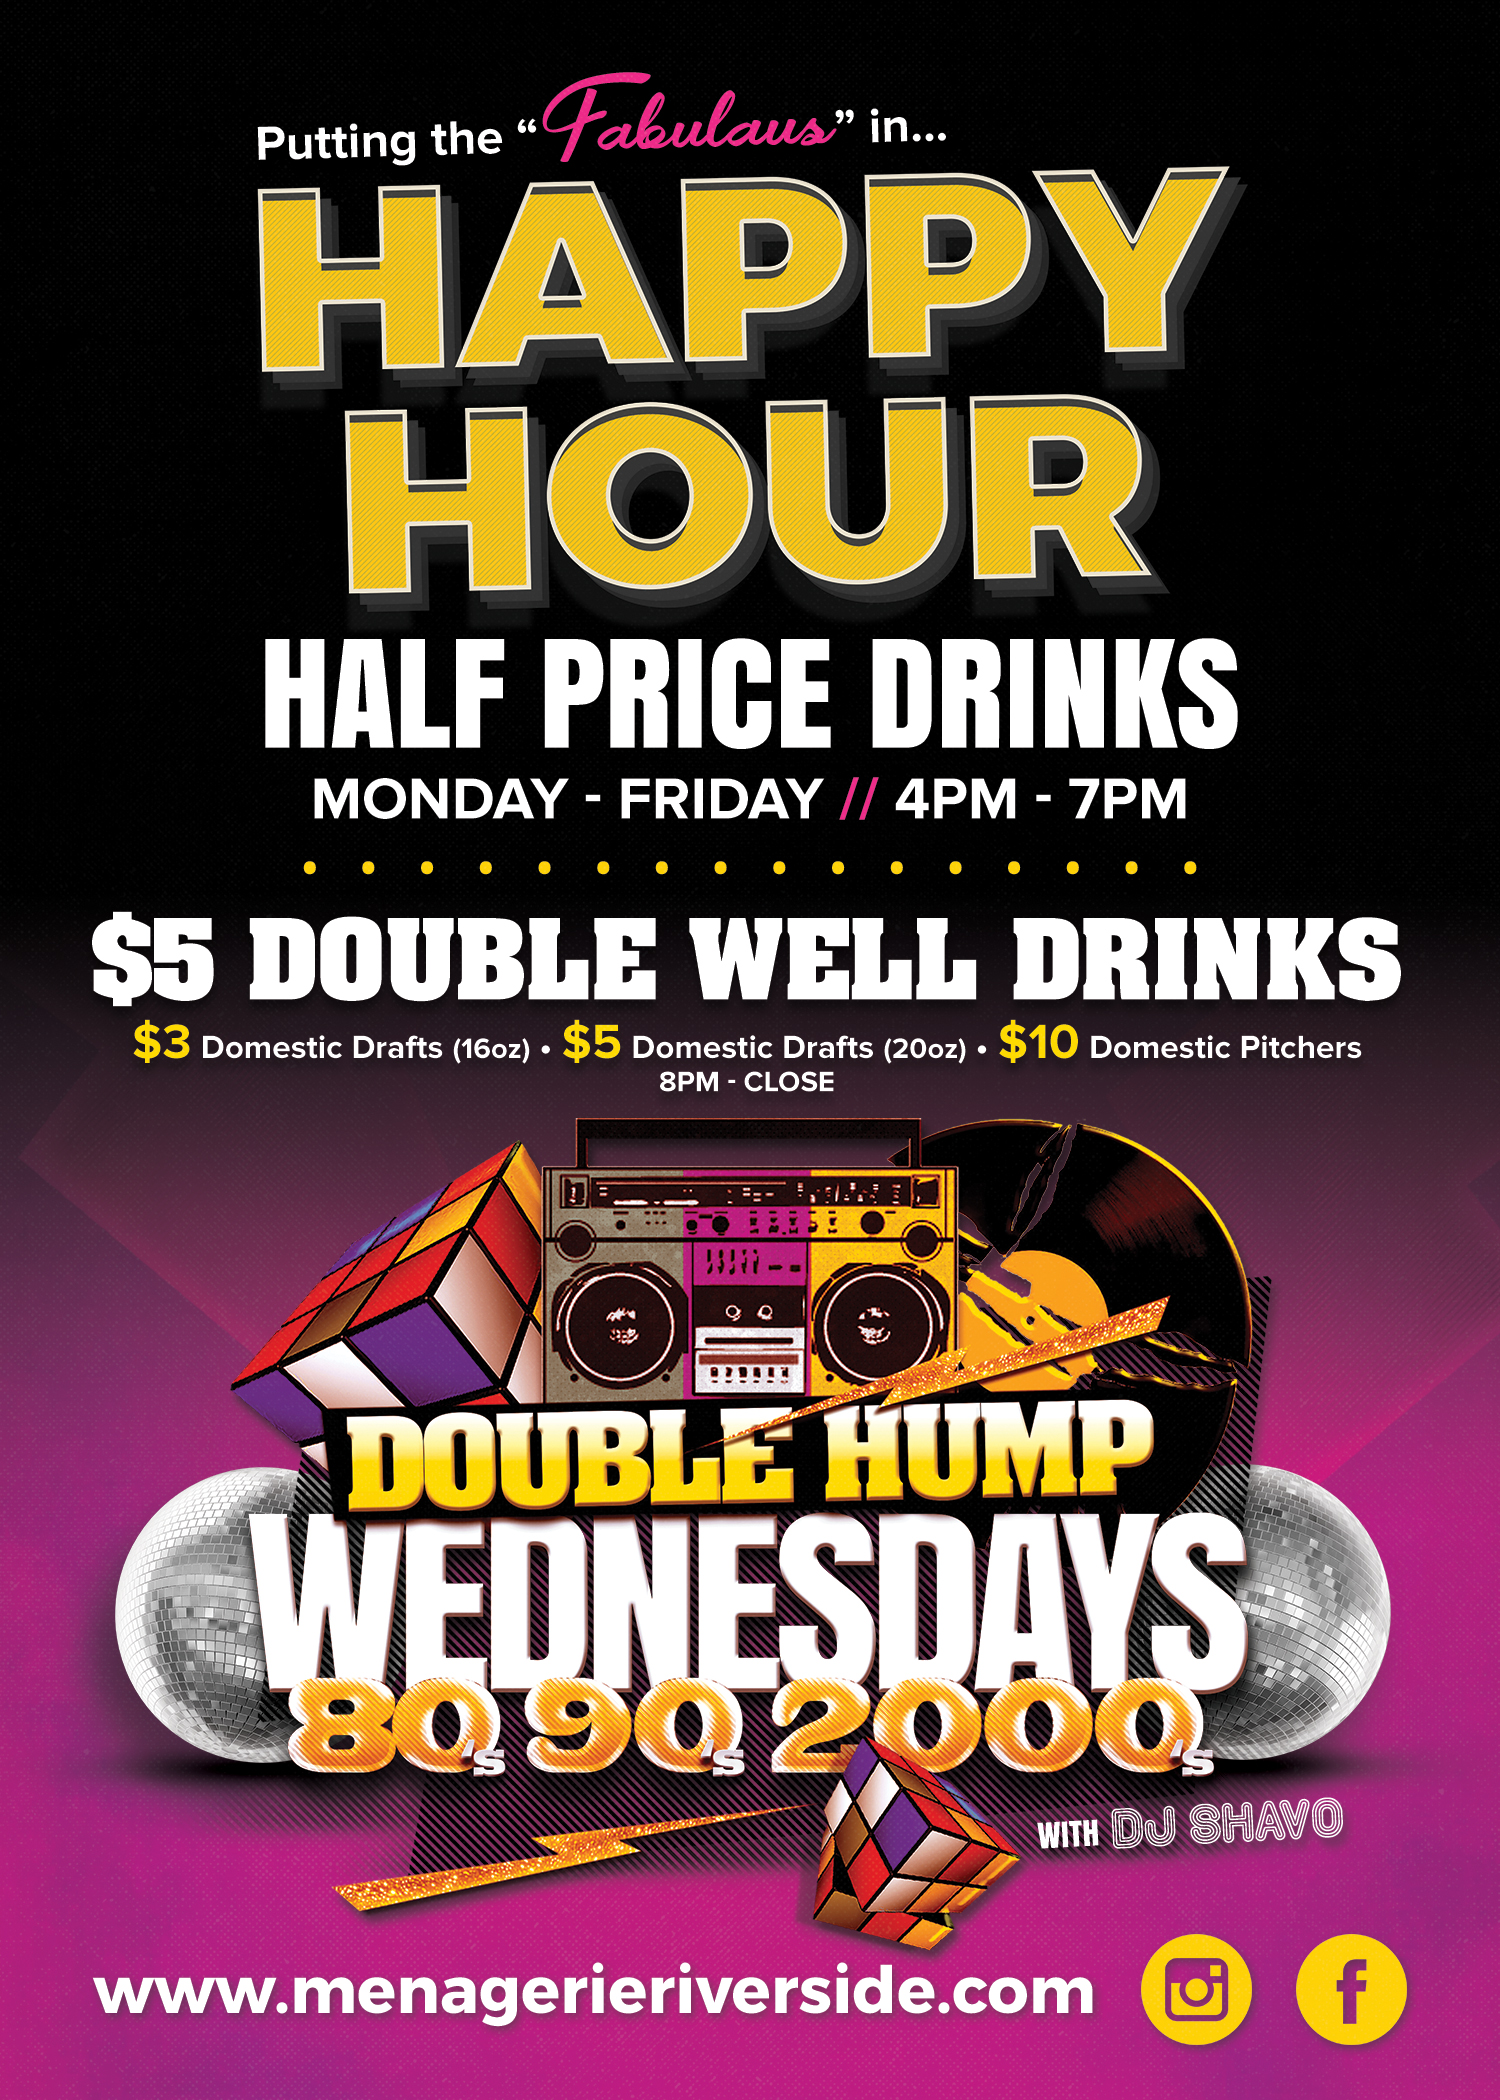 Double Hump Wednesdays Promo.jpg